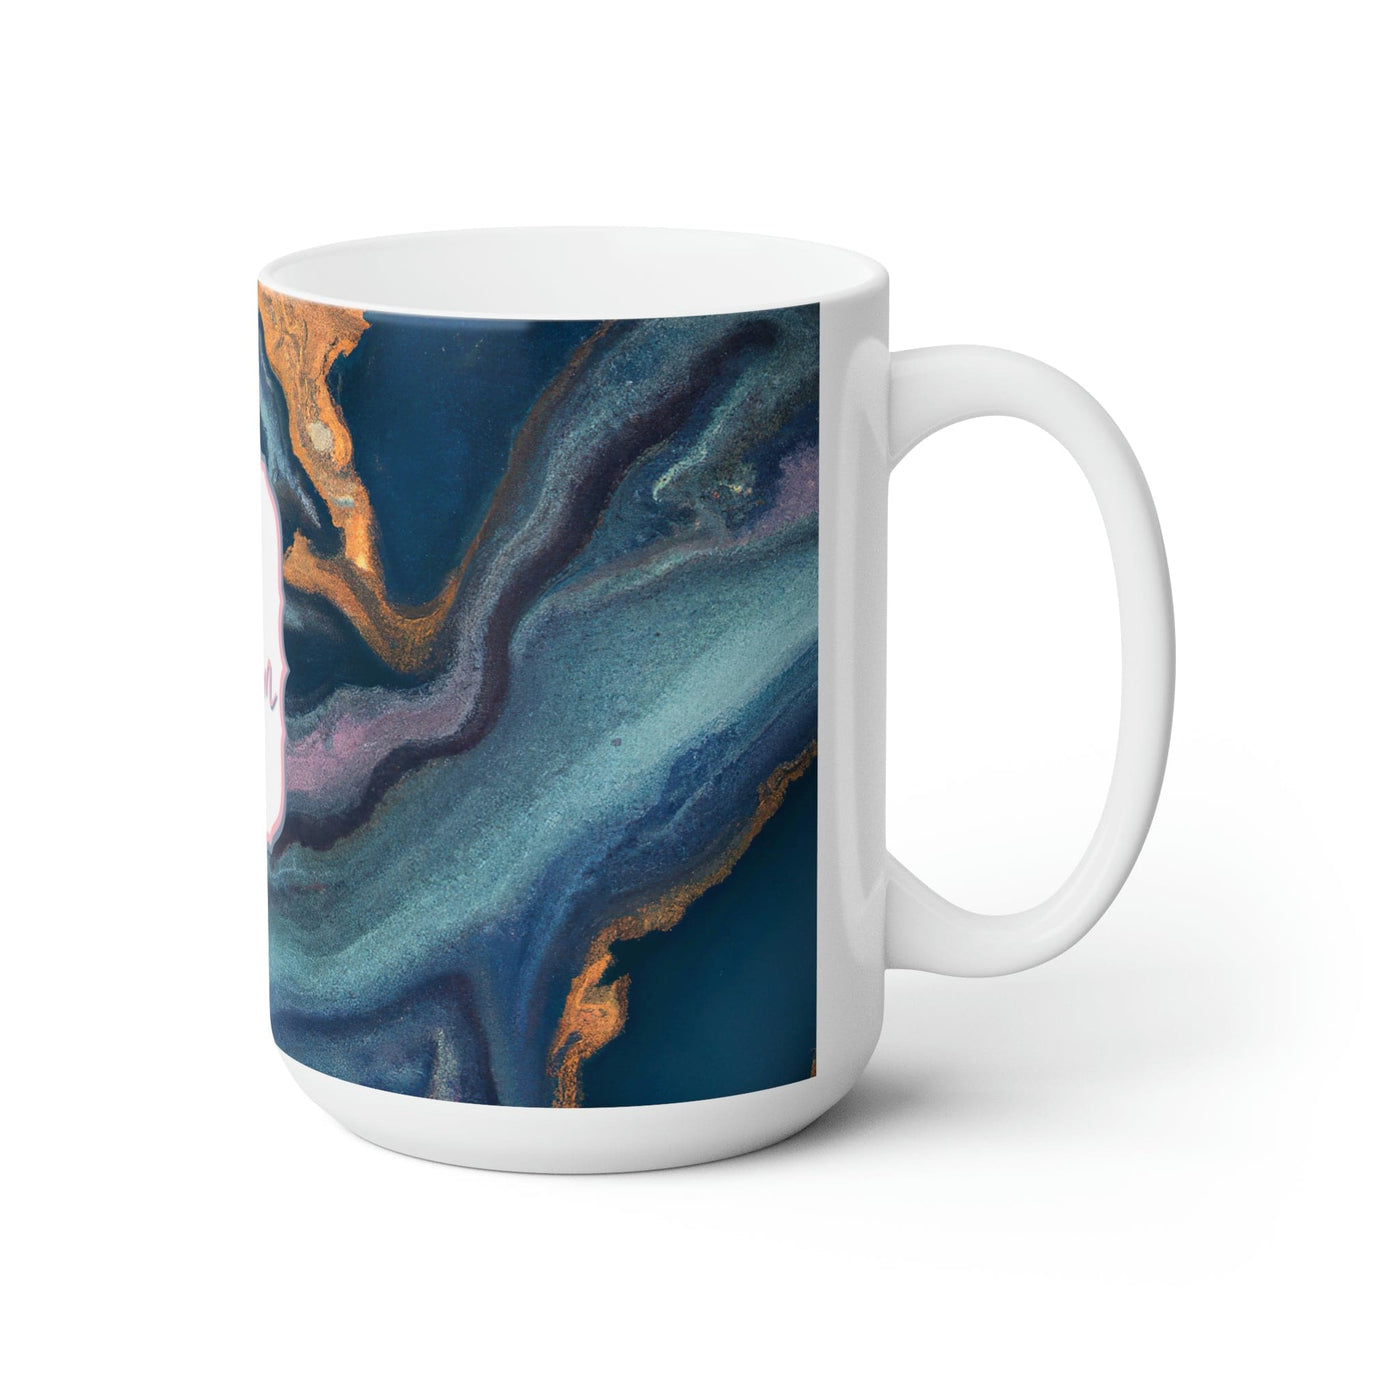 Decorative Ceramic Mug 15oz - Navy Blue Marble Swirl Pattern - Decorative